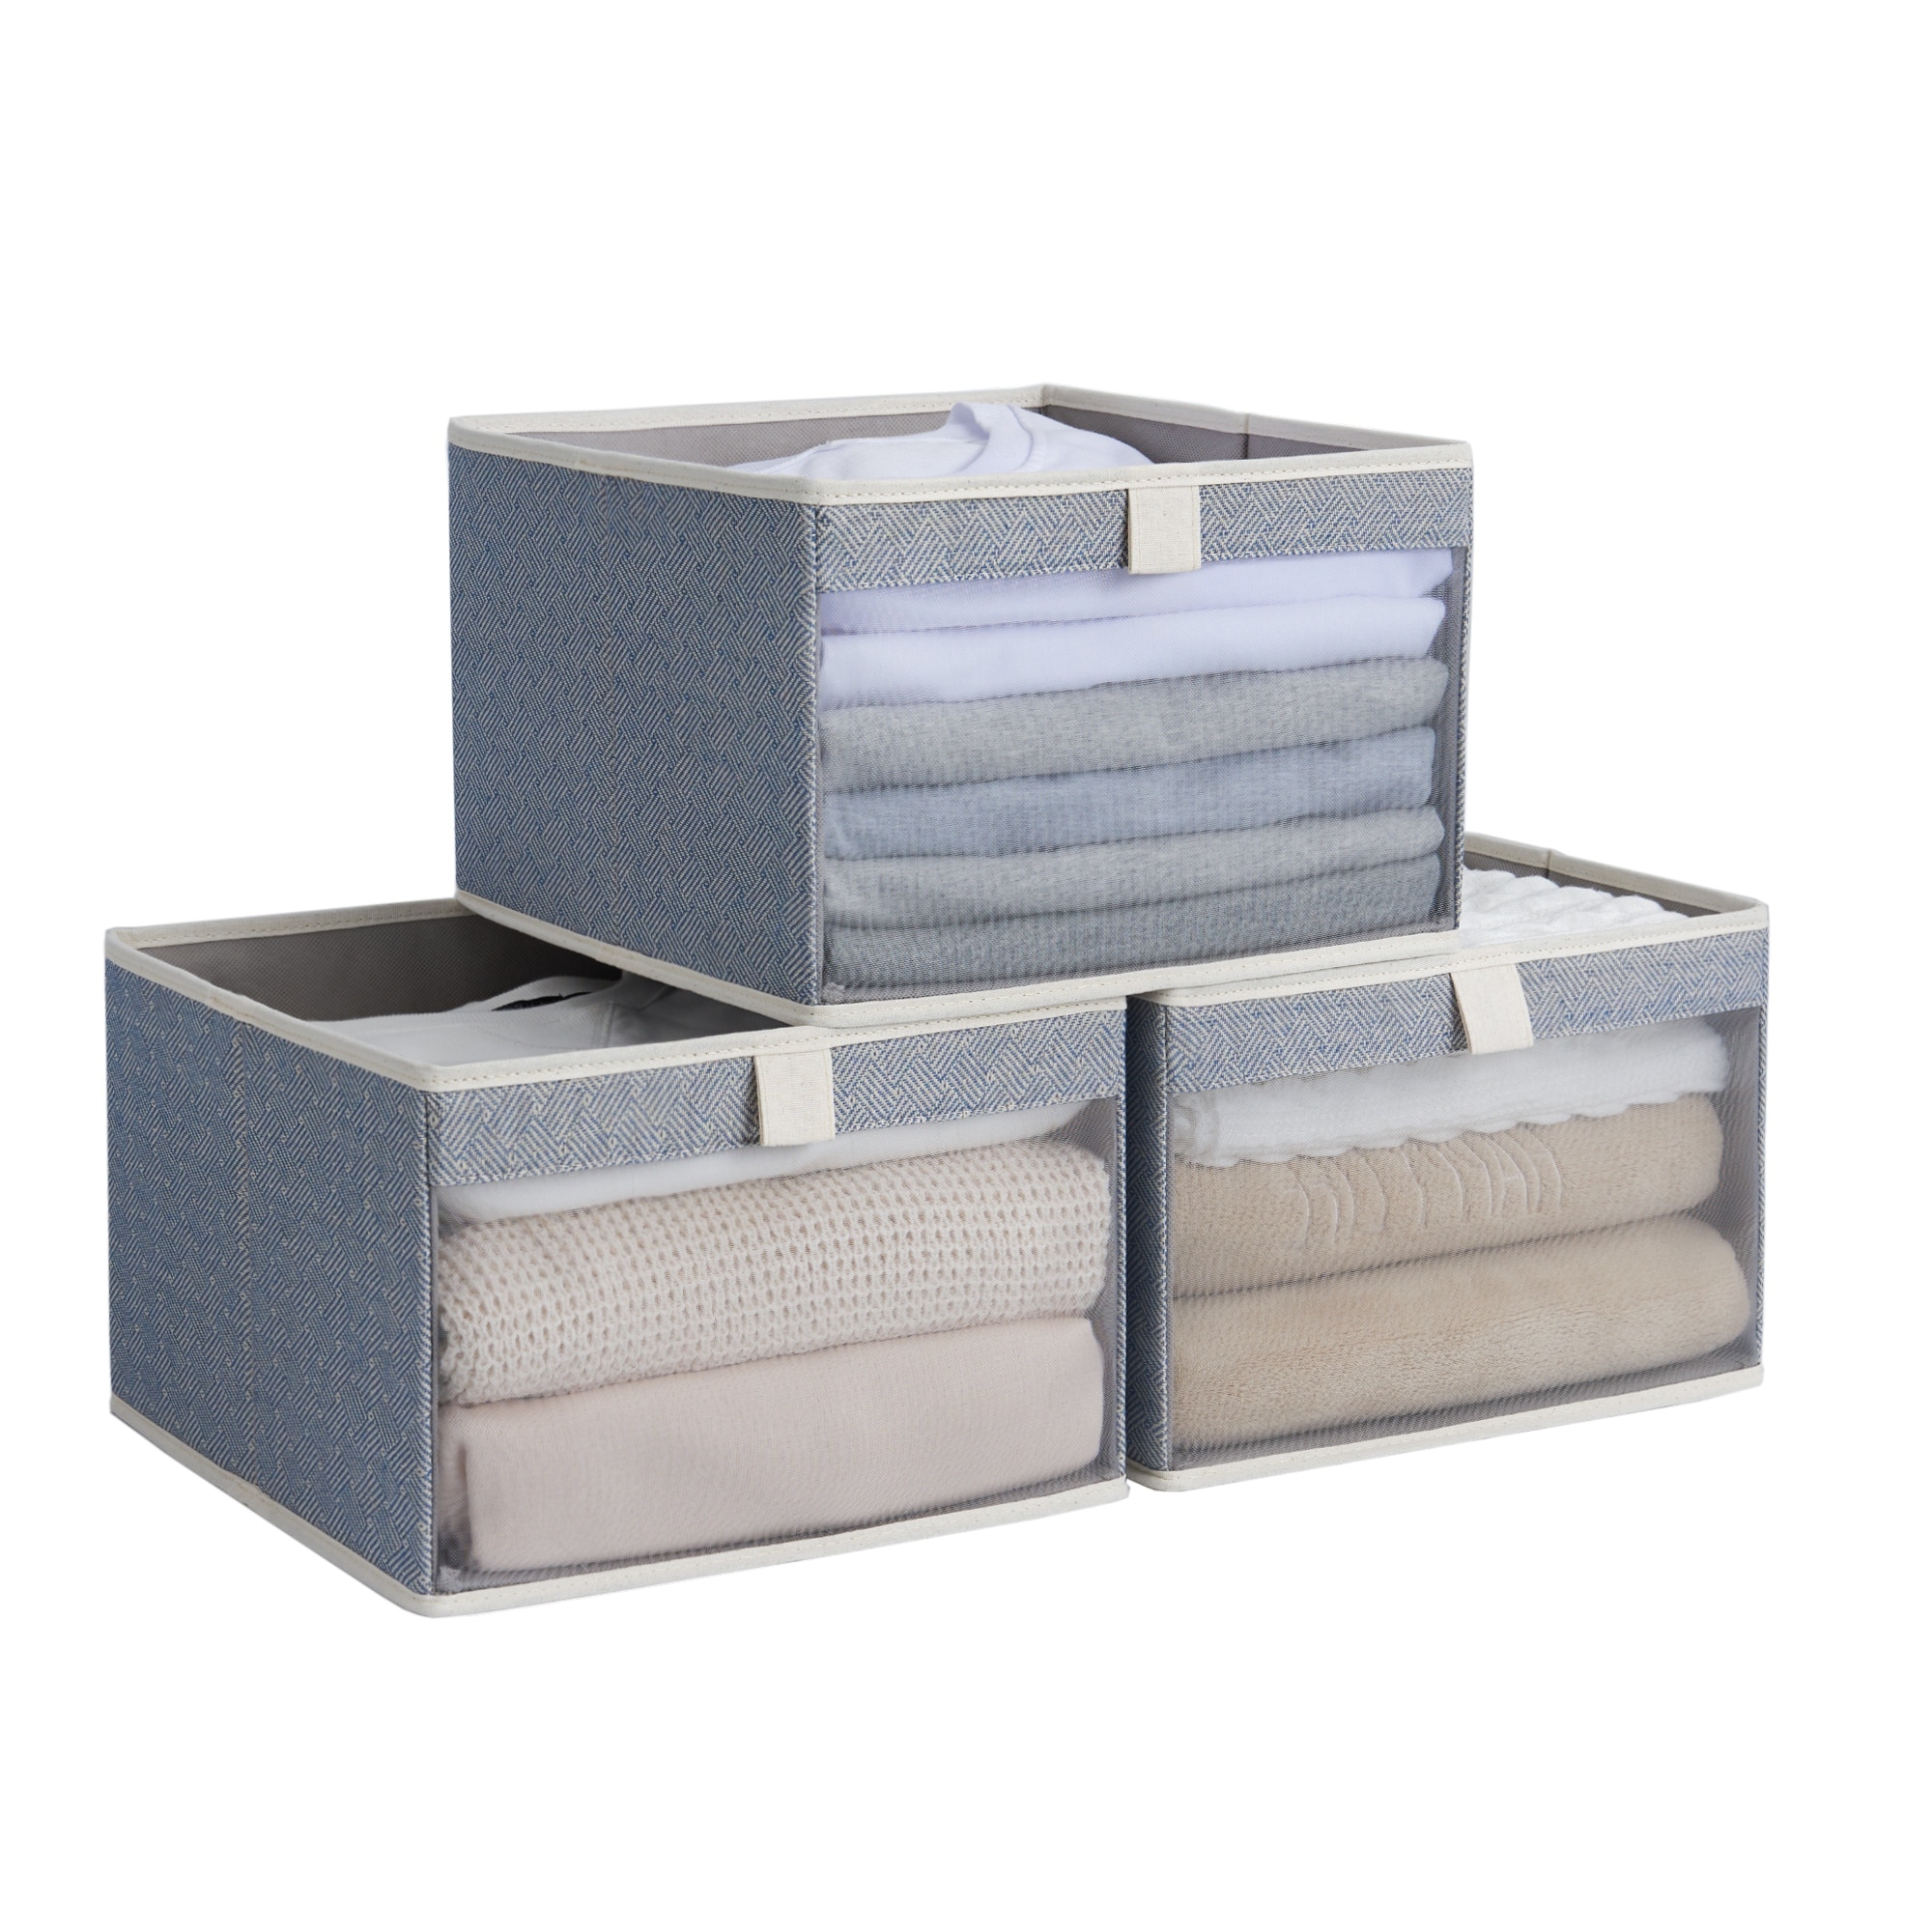 Fab totes Storage Bins [3-Pack], Foldable Storage Baskets for Organizing  Toys, Books, Shelves, Closet, Large Storage Box with Rope Handles, Sturdy Organizer  Bins, White & Grey